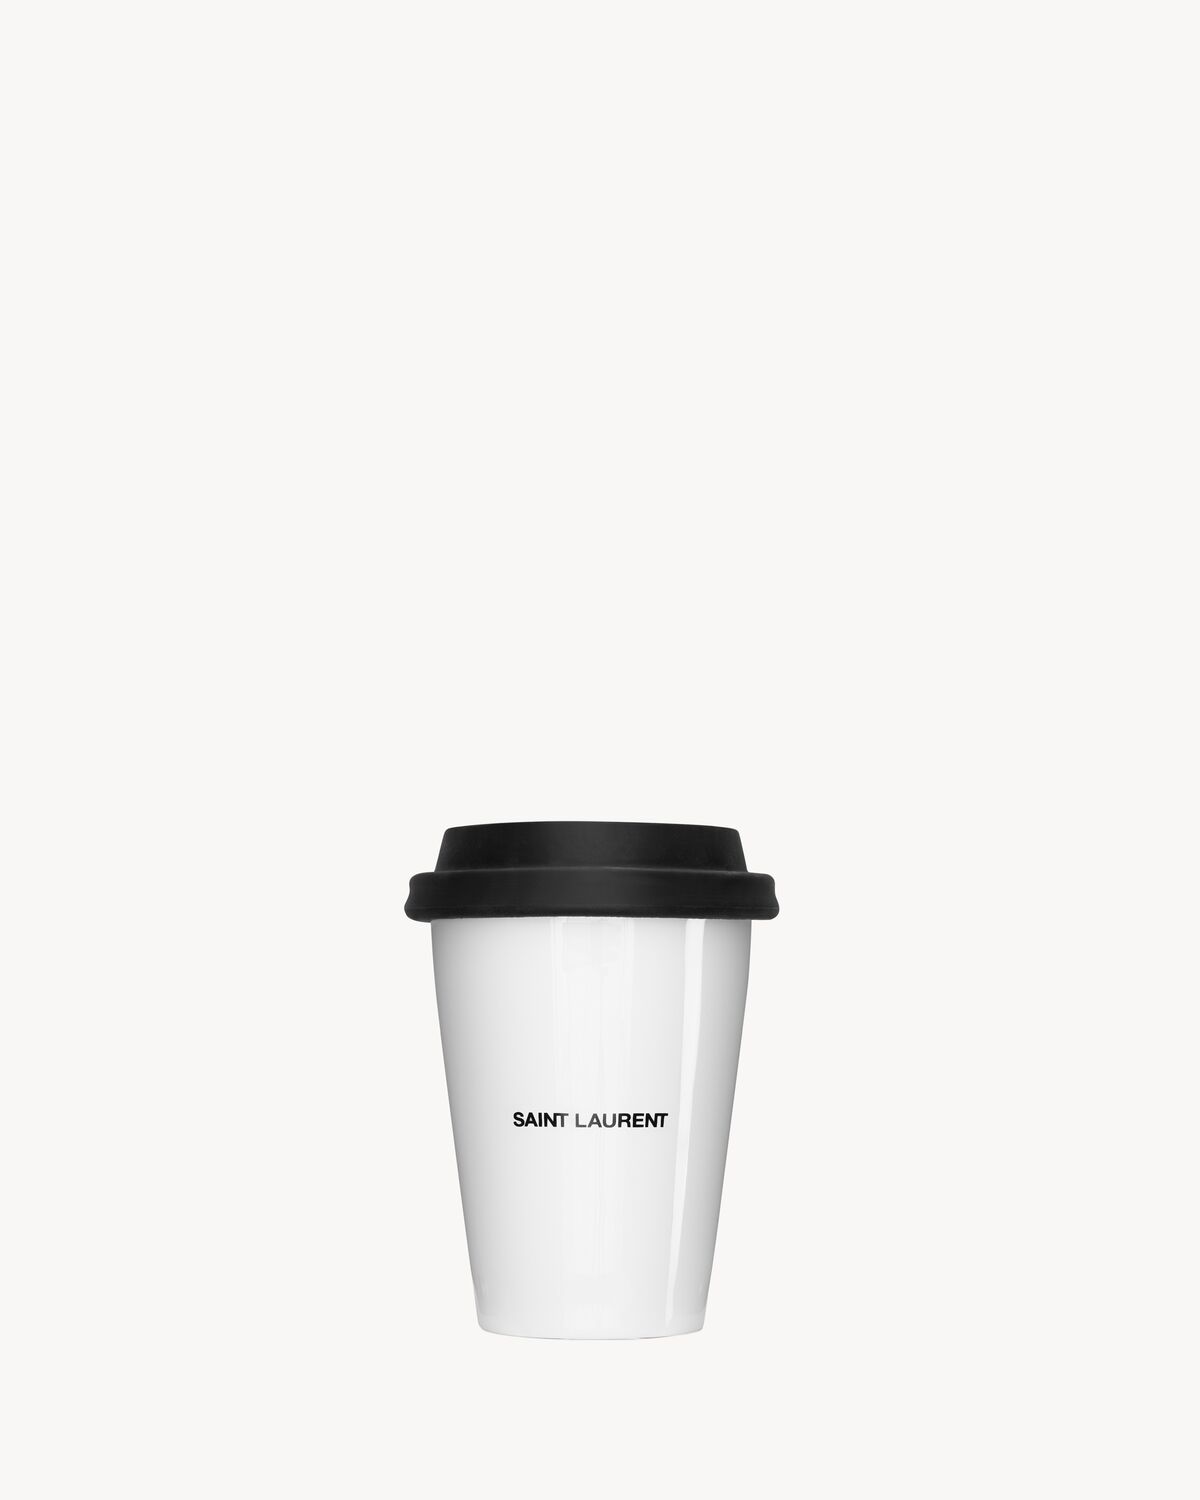 Small coffee mug in ceramic